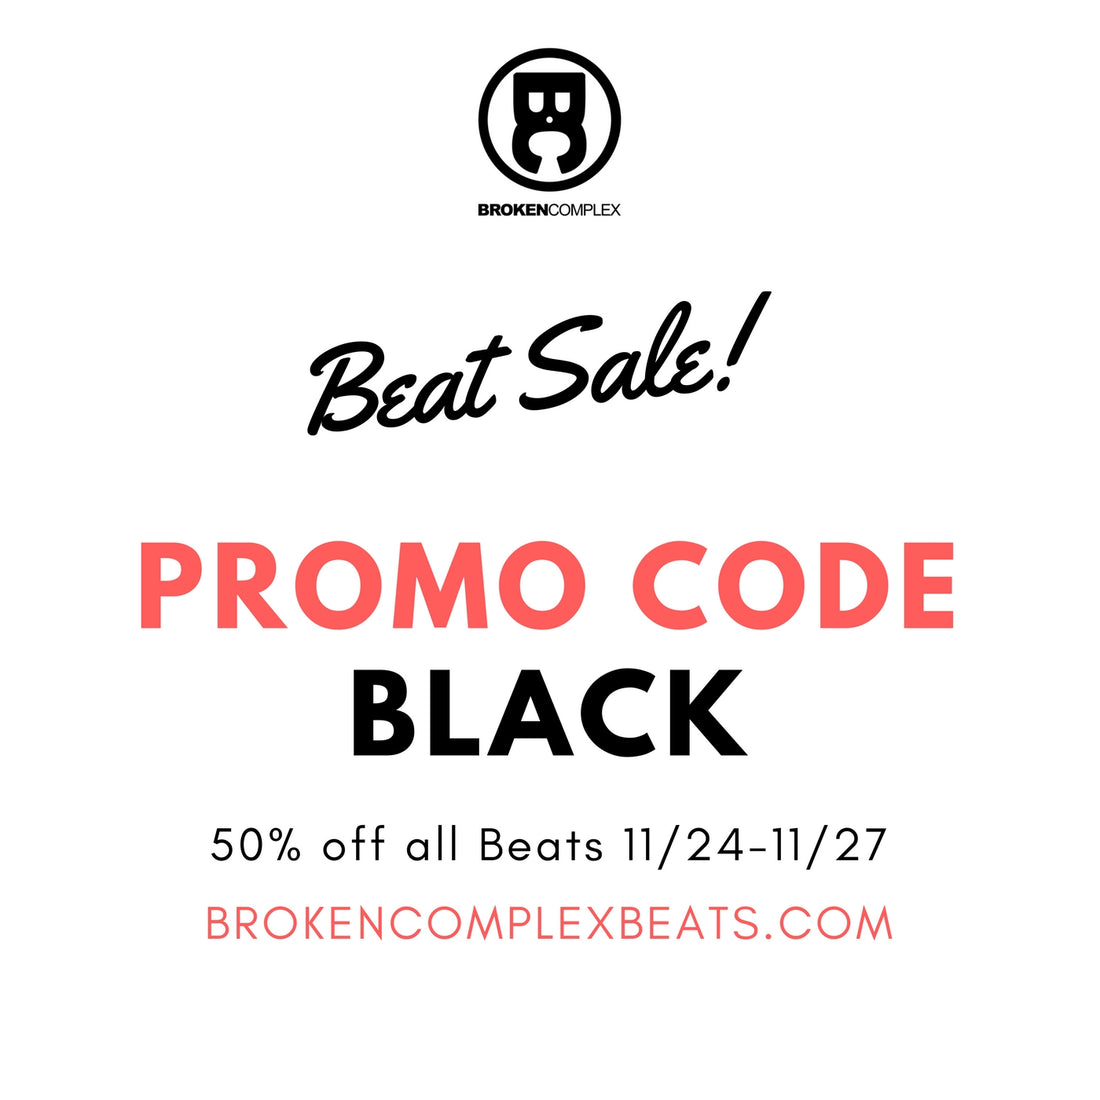 [SALE] 50% off ALL BEATS in the Broken Complex Beats Store!